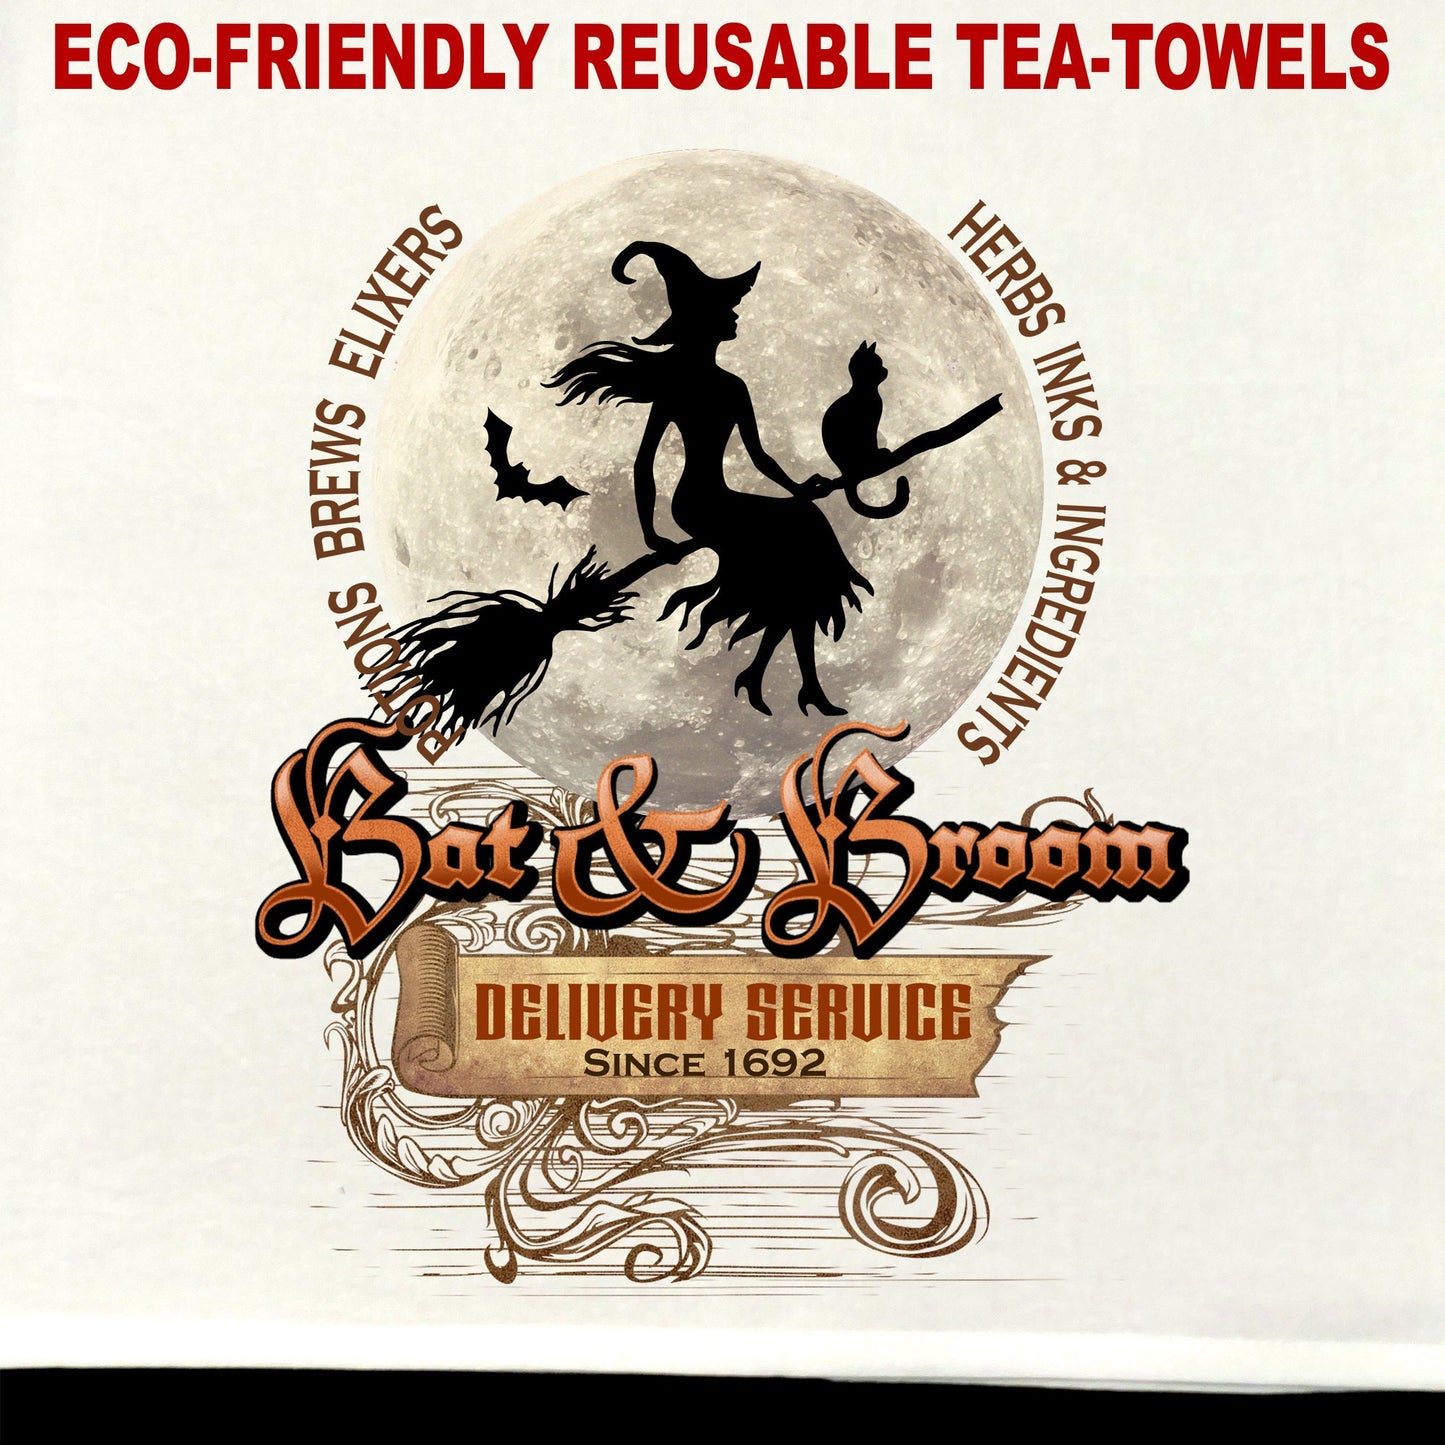 Bat & Broom Delivery Service Tea Towel / tea towel / dish towel / hand towel / reusable wipe / kitchen gift / kitchen deco